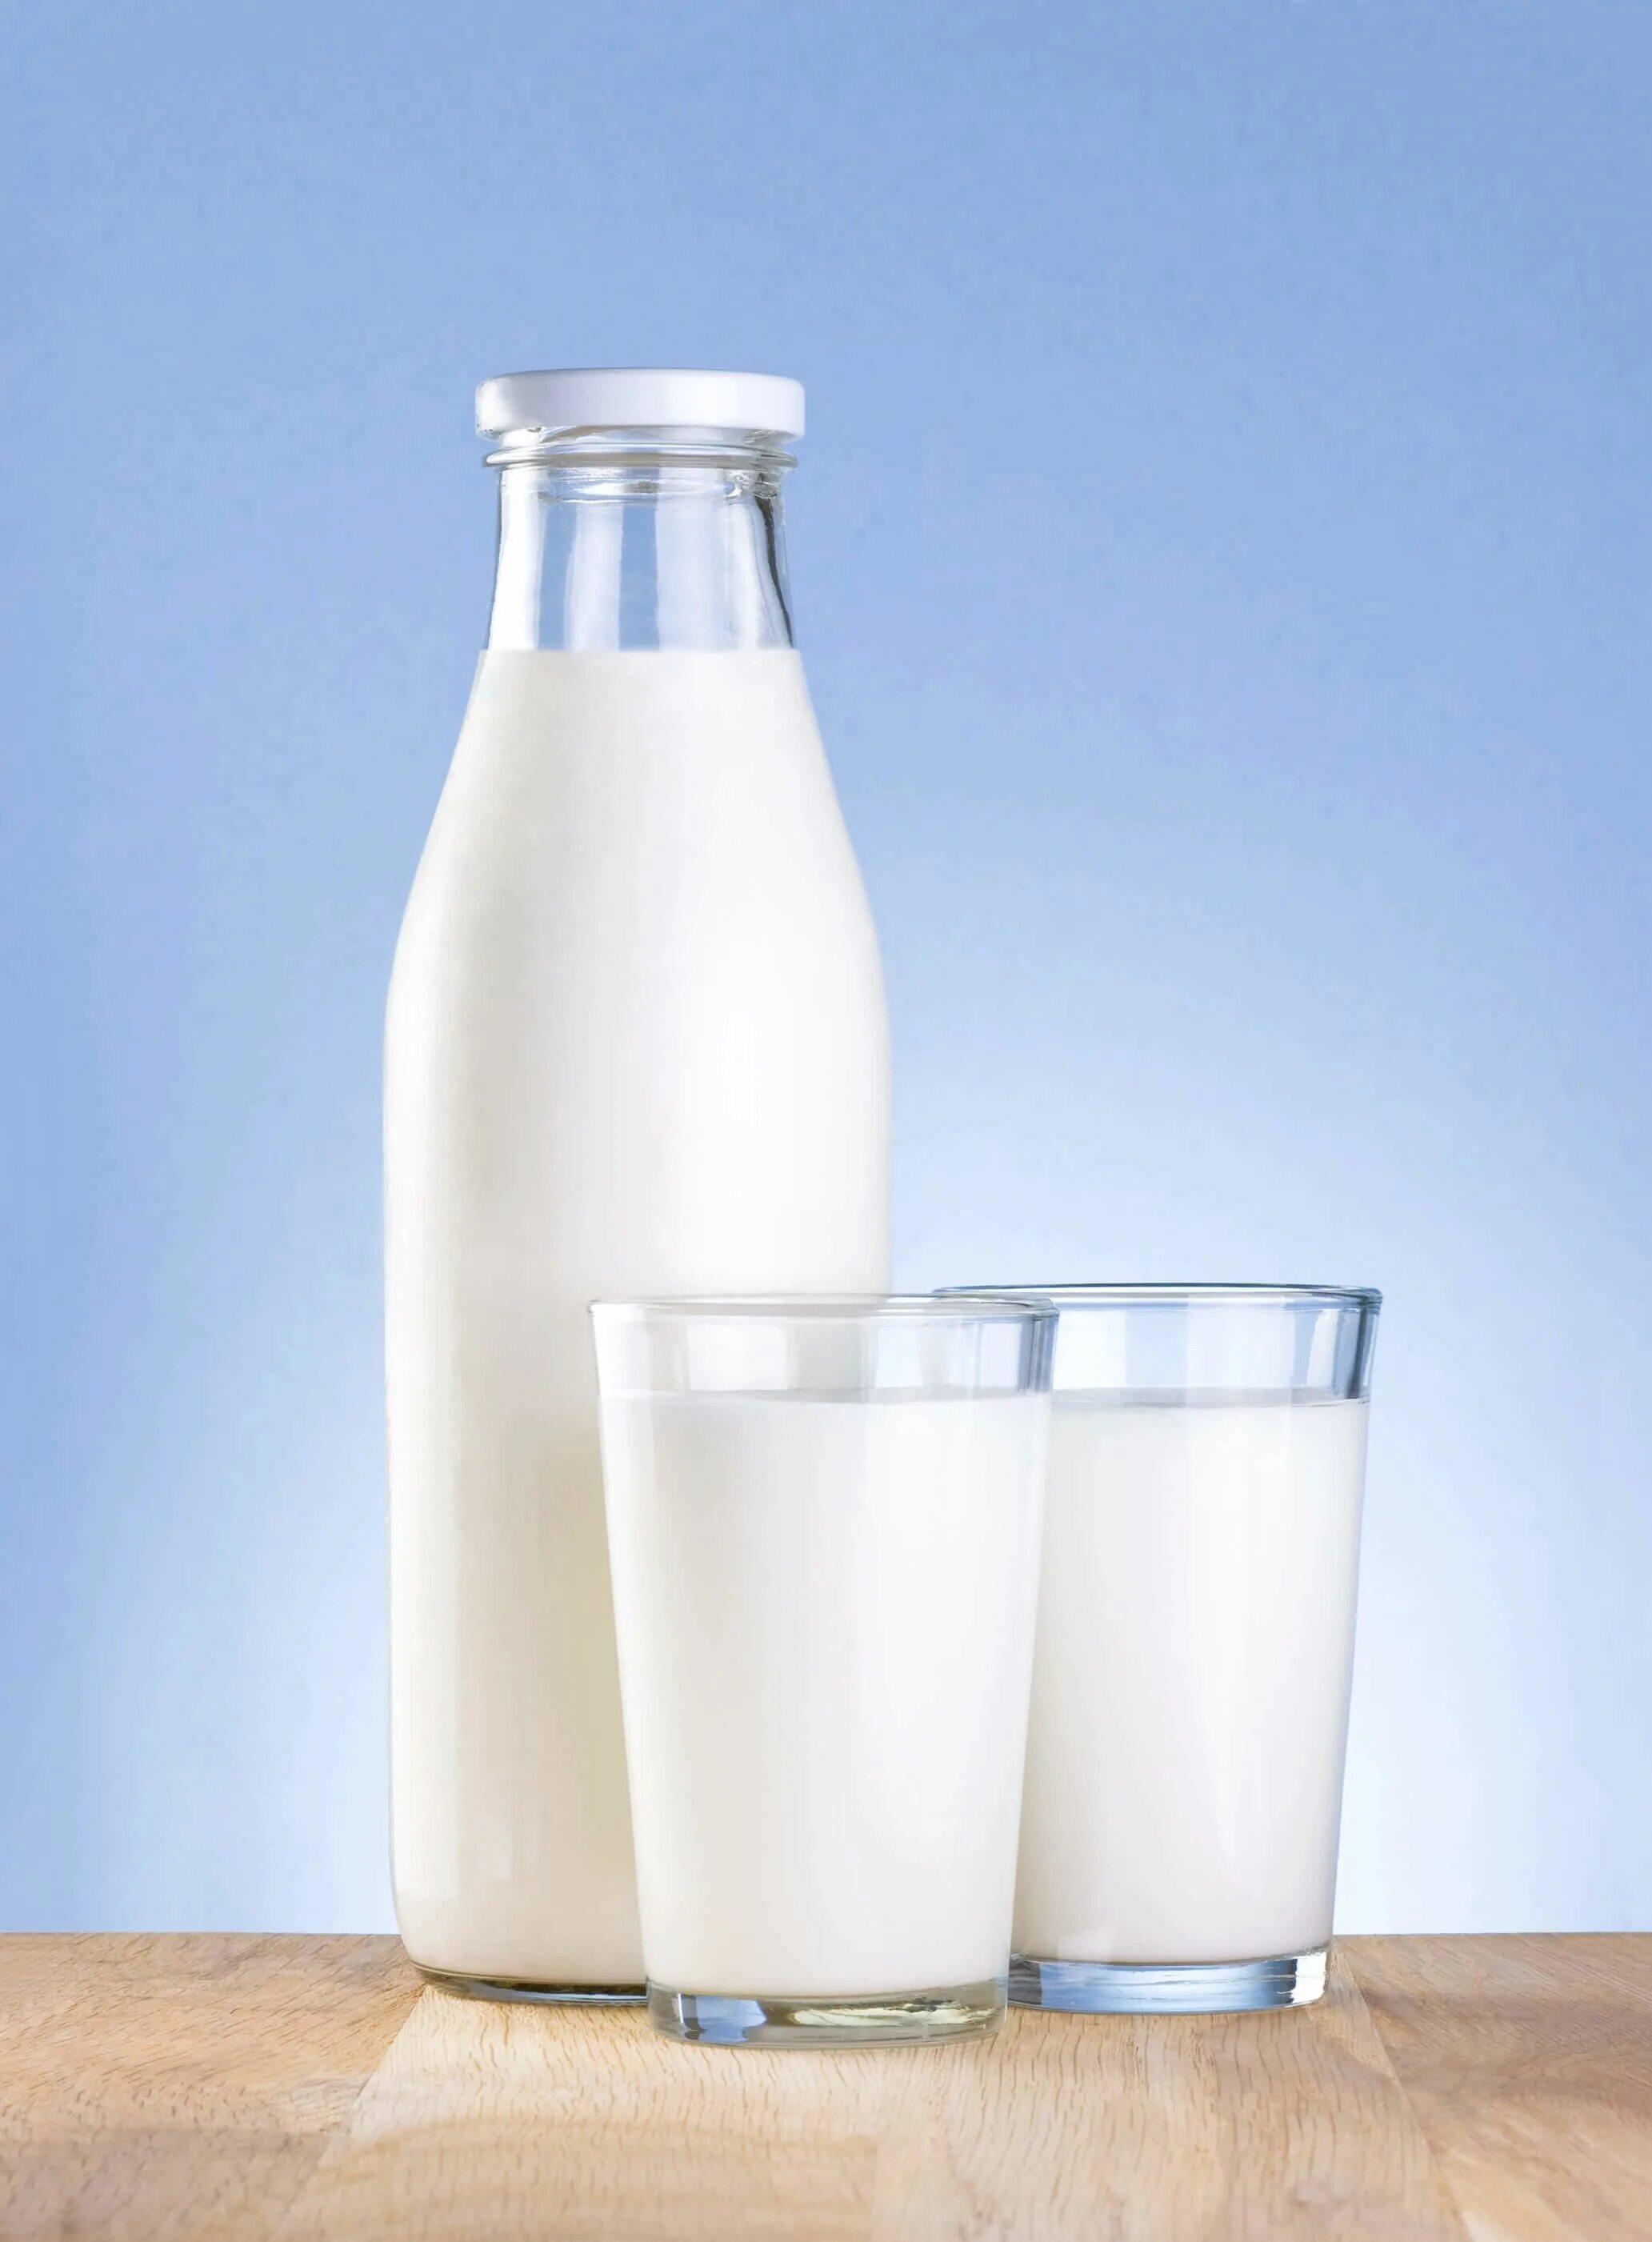 Бутылка молока. Молоко Milk. Молоко в бутылке. Молоко картинка. Бутылка молока буренка раньше вмещала